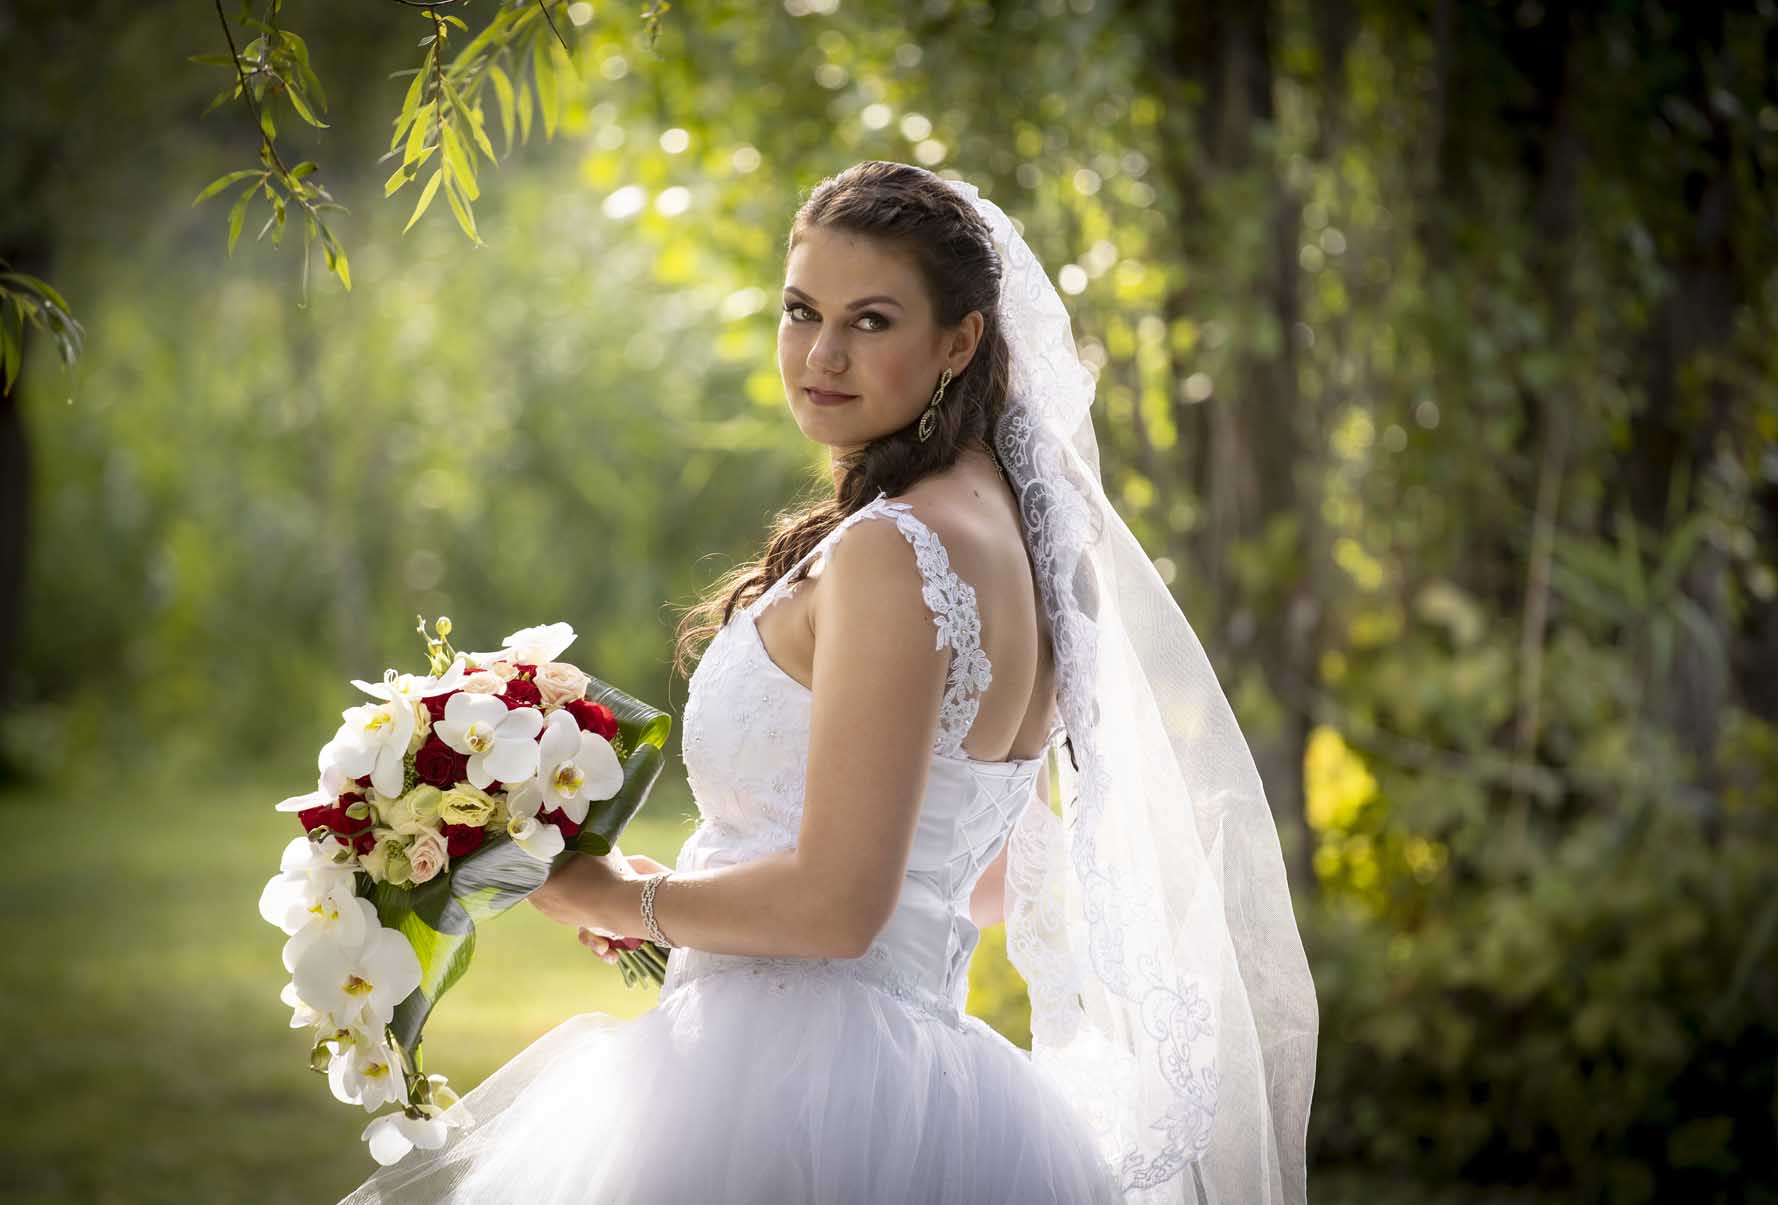 03_0201_JAG09149-wedding-eskuvofotok-kreativ-fotok-pontfoto-barna-peter